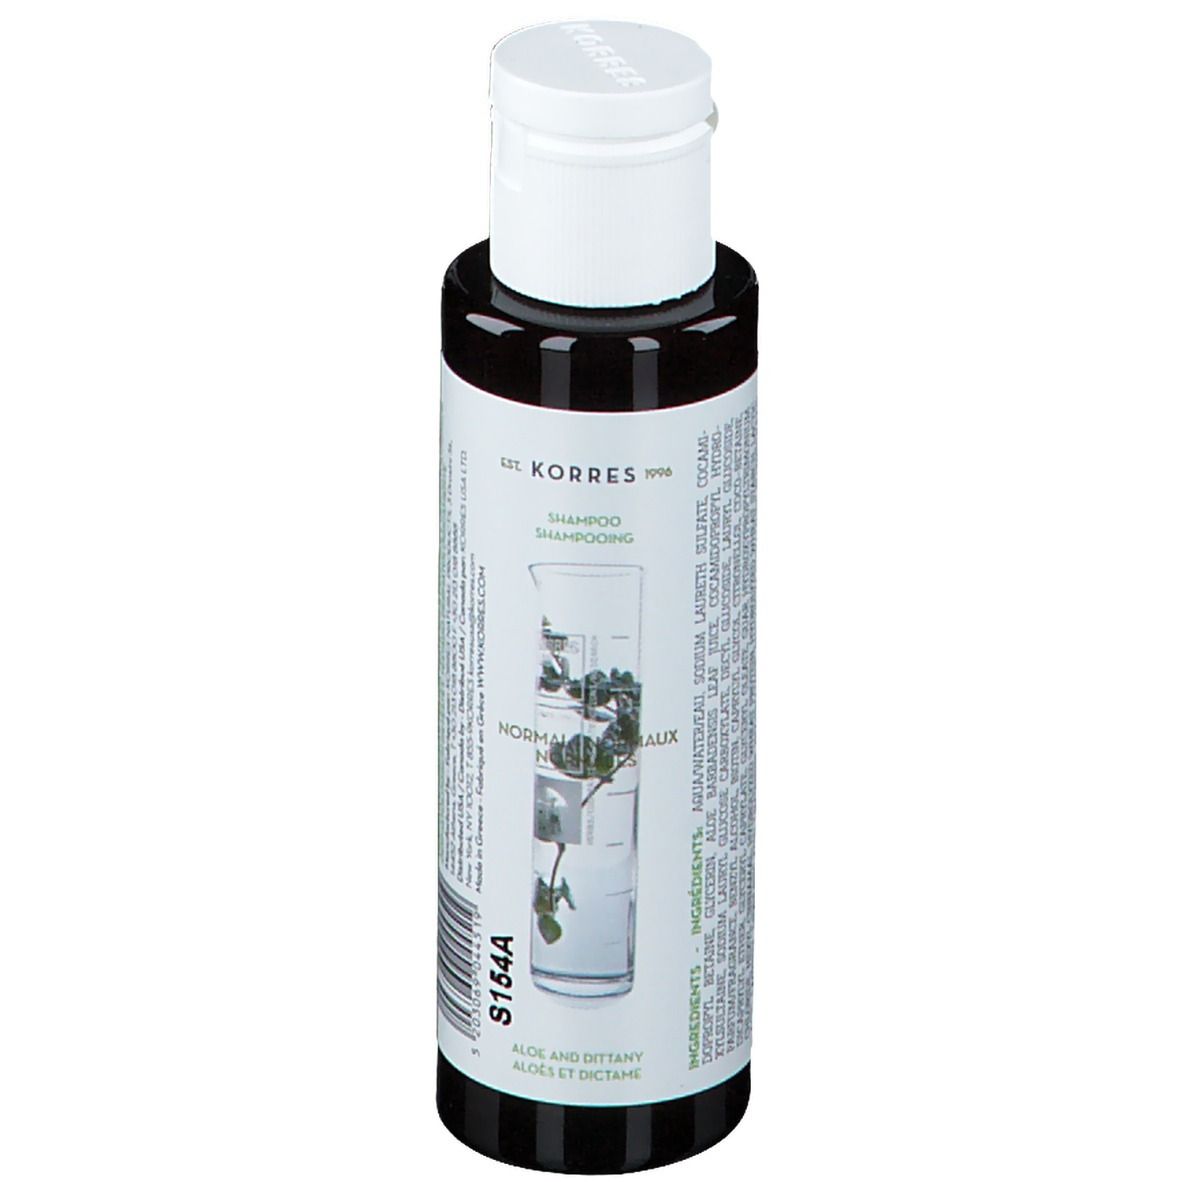 Image of KORRES® Shampoo Aloe und Diptam